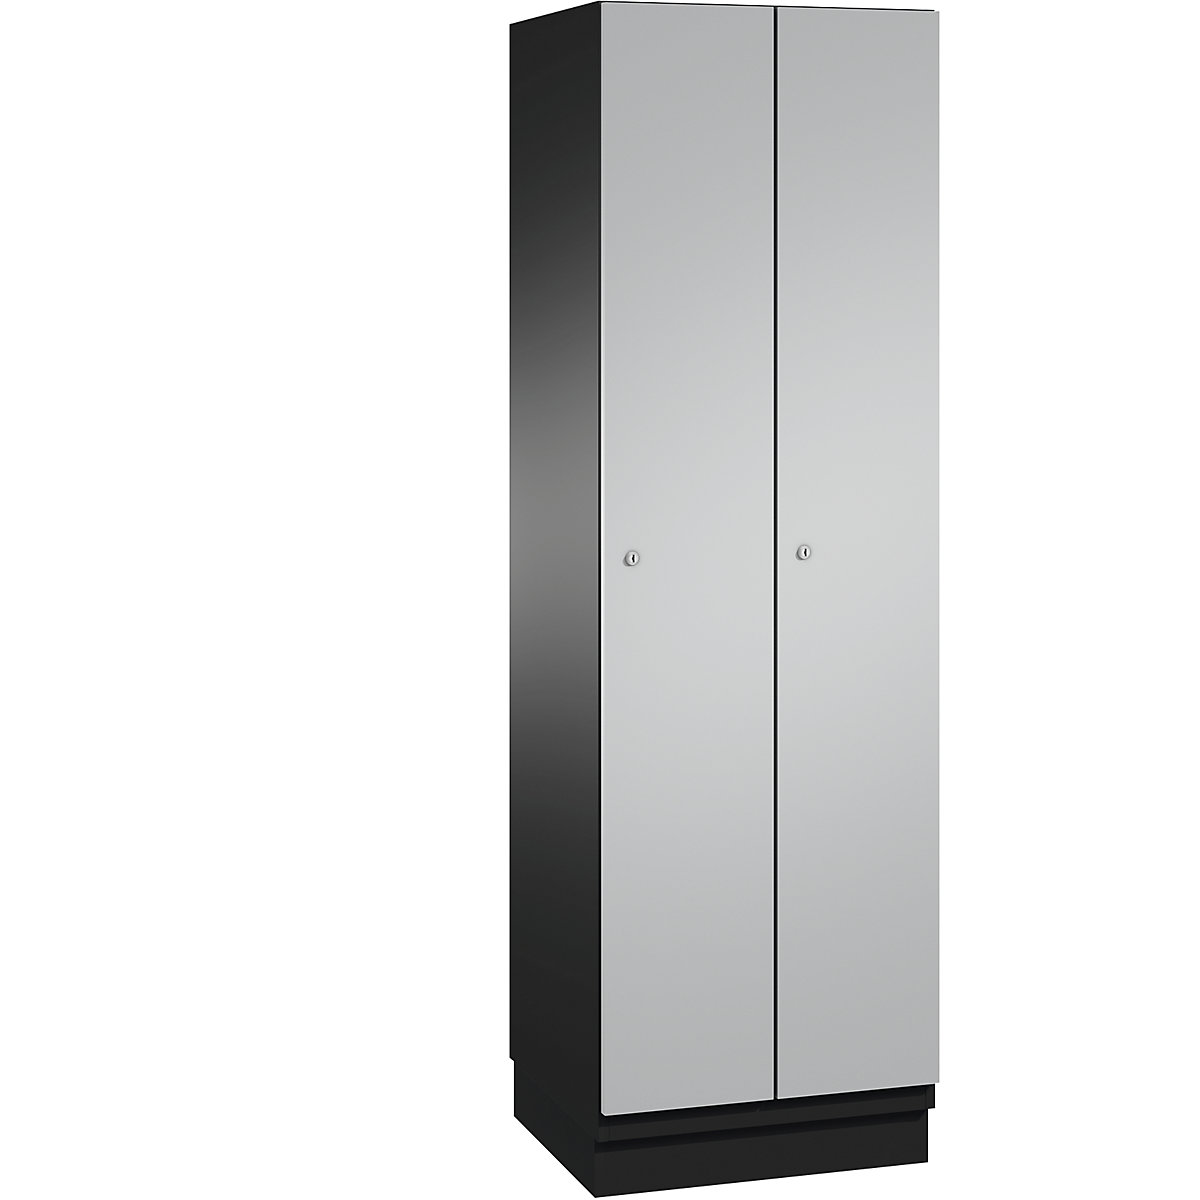 CAMBIO cloakroom locker with sheet steel doors – C+P, 2 compartments, 600 mm wide, body black grey / door white aluminium-4